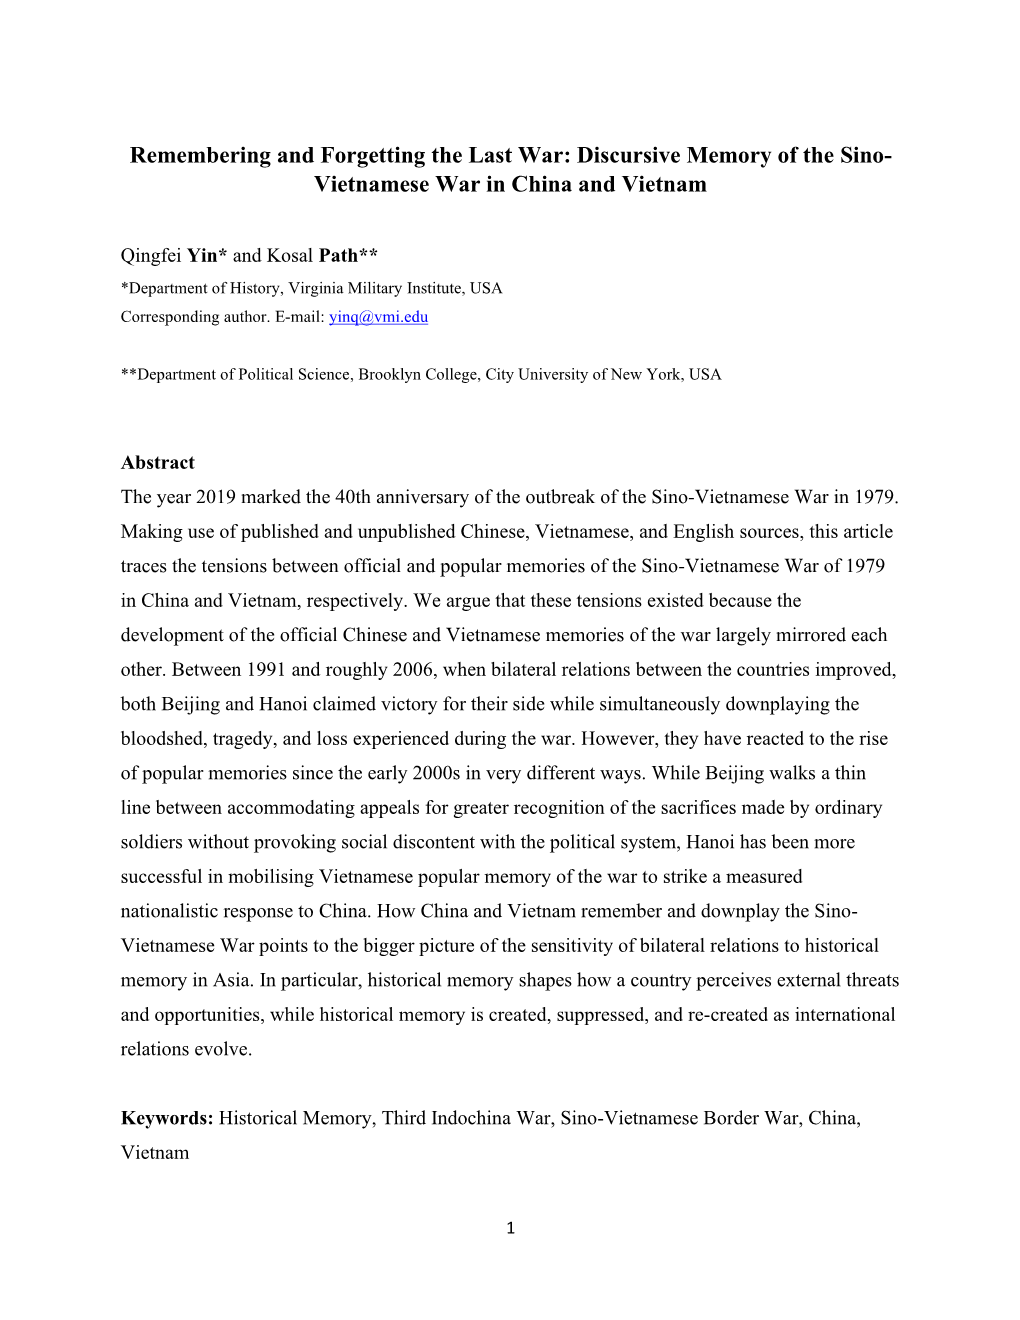 Discursive Memory of the Sino- Vietnamese War in China and Vietnam